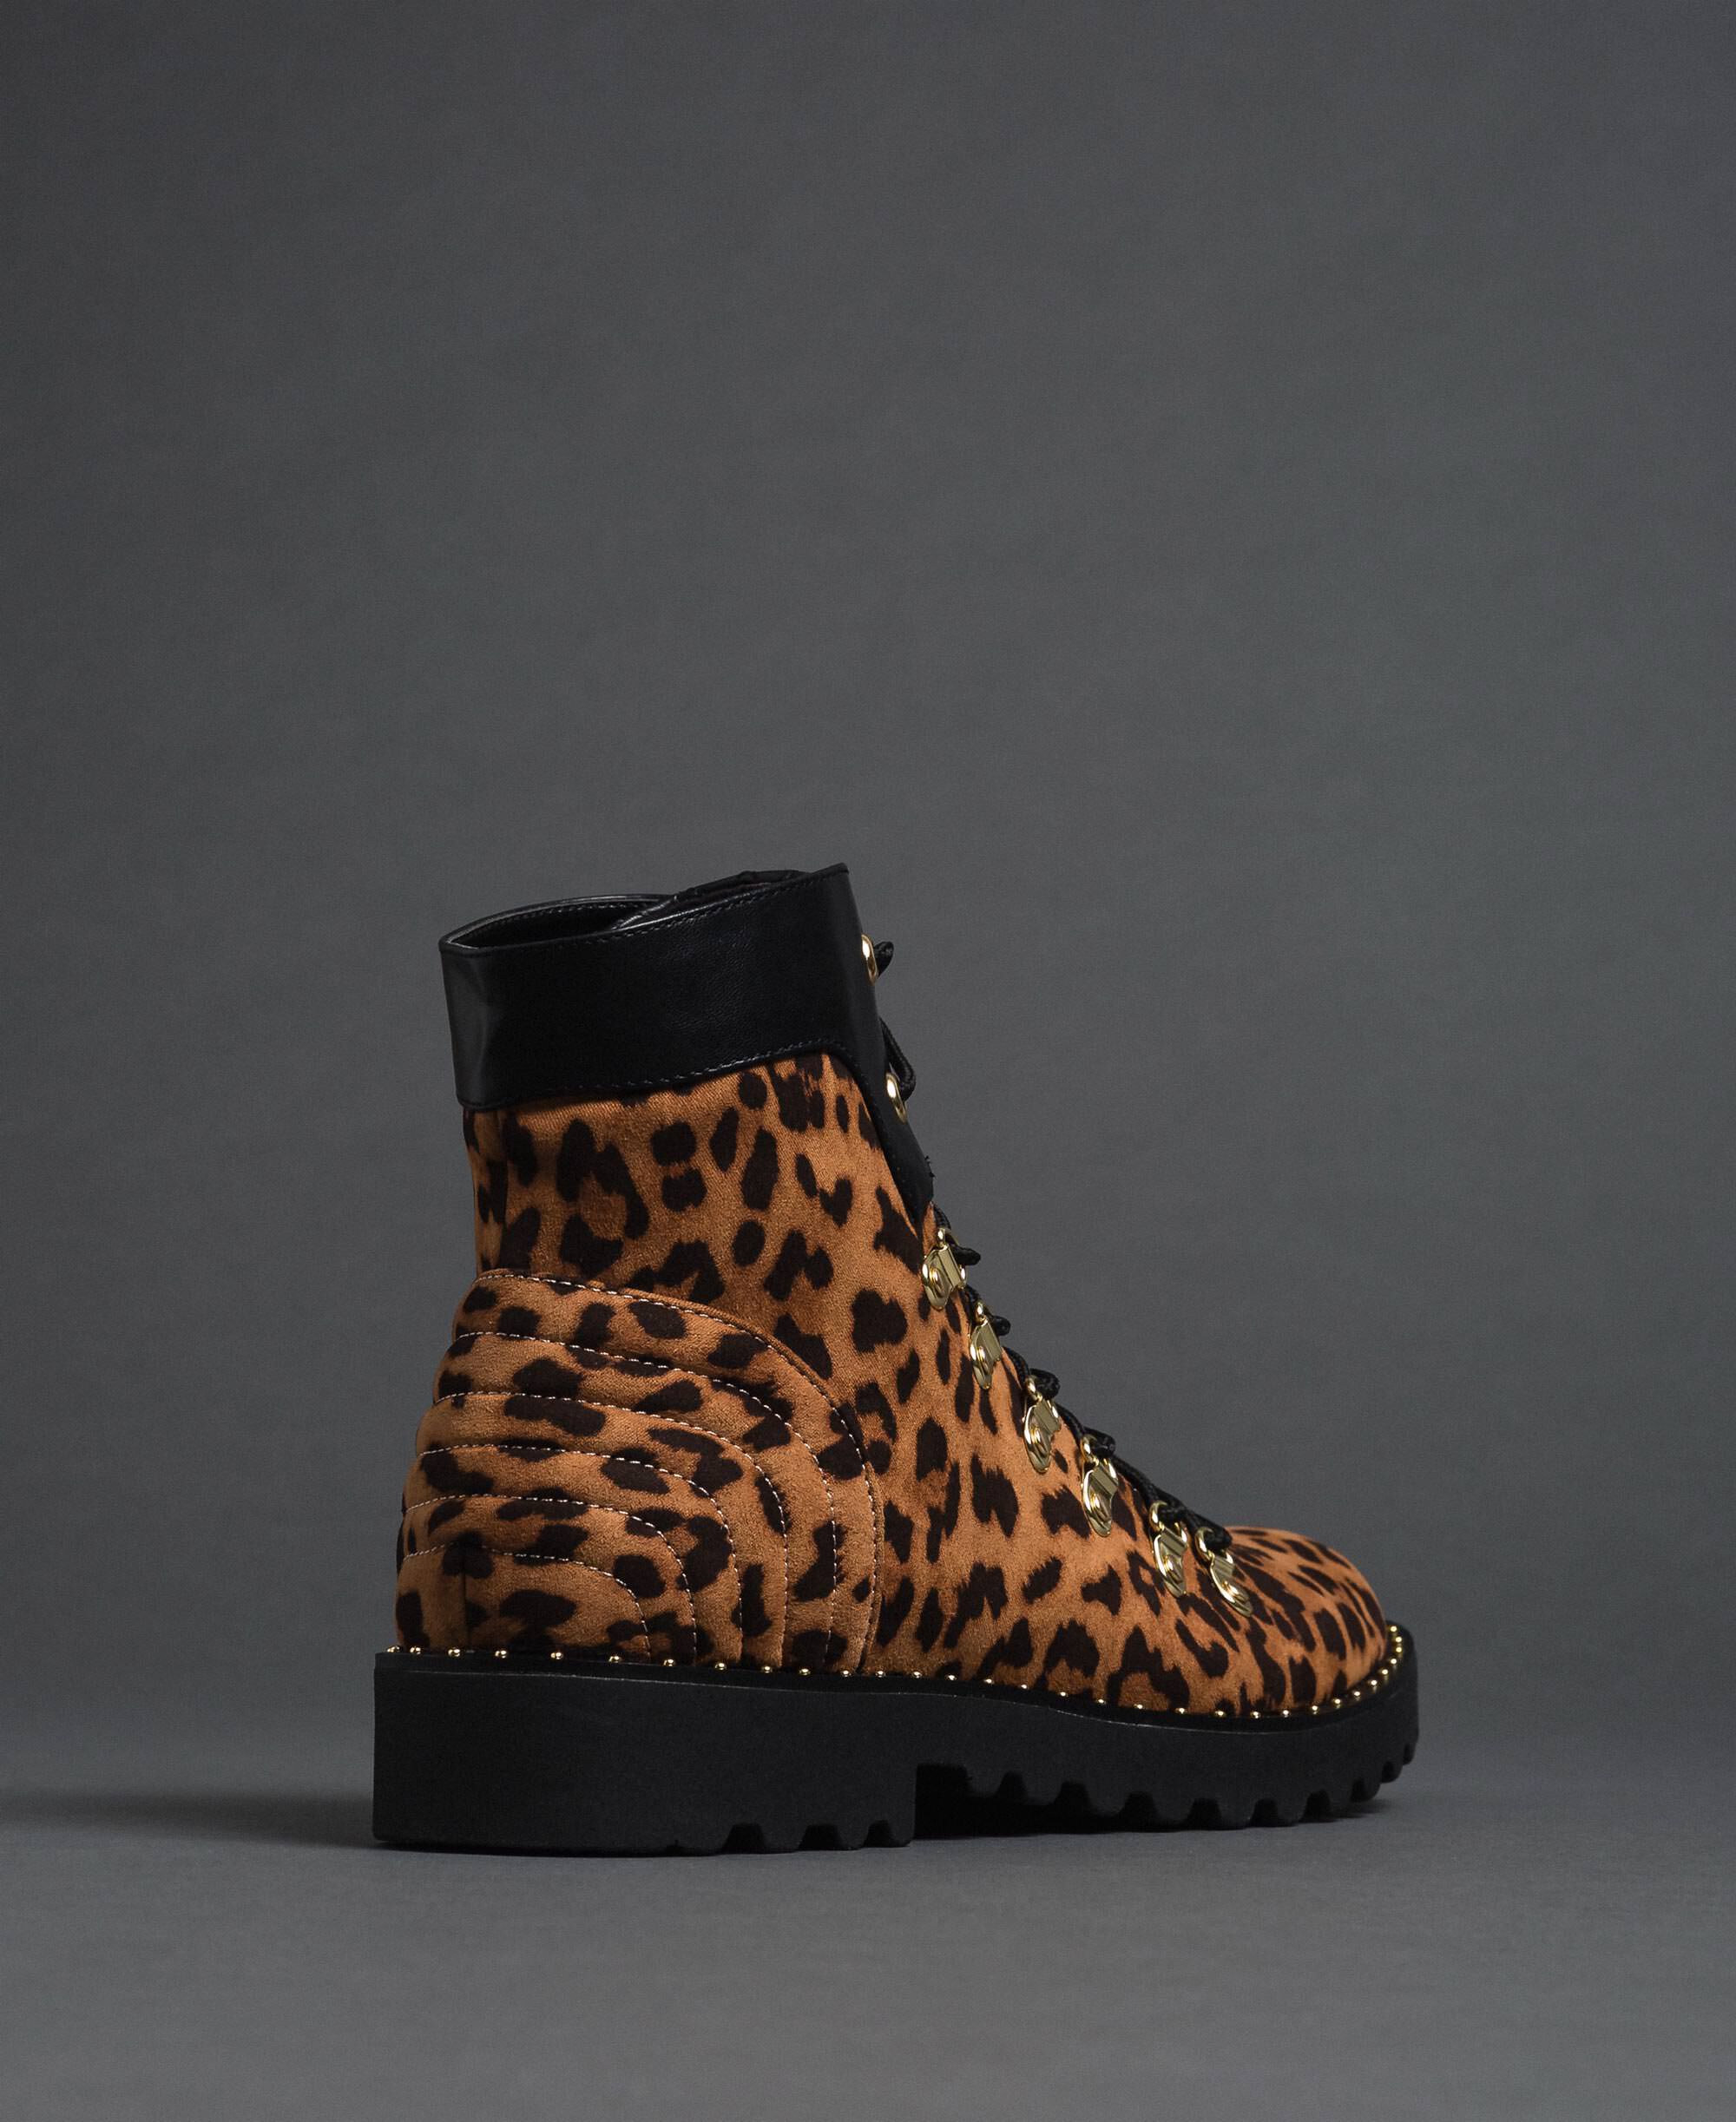 cheetah combat boots